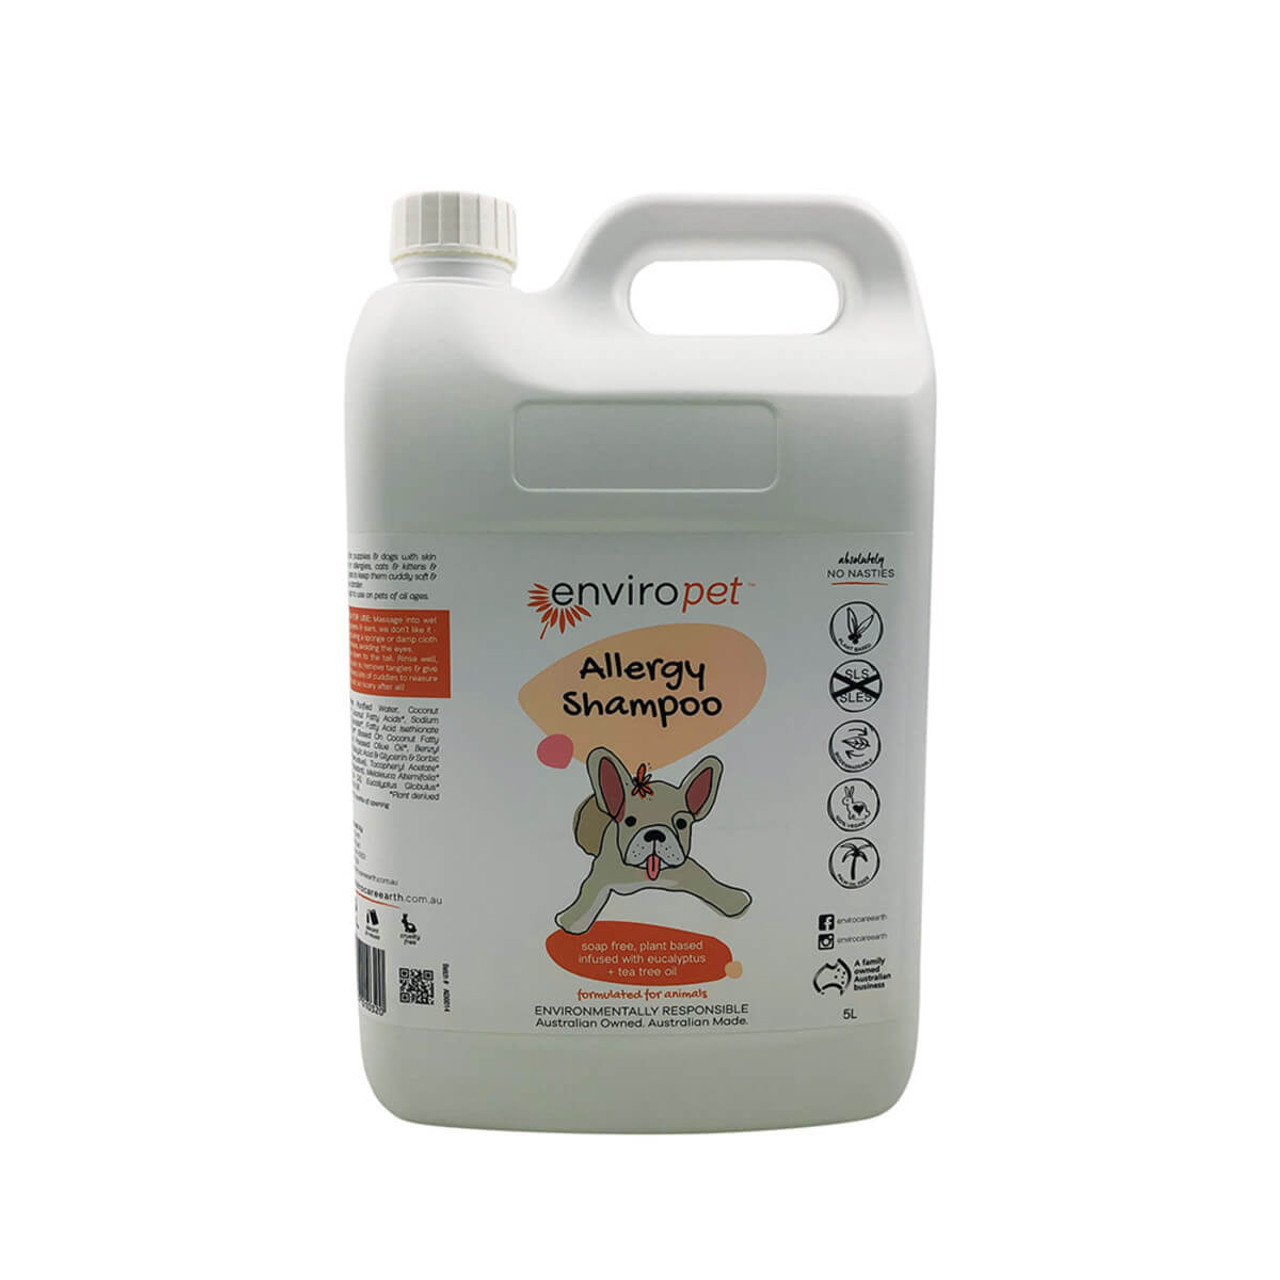 EnviroPet Pet Allergy Shampoo 5L Refill